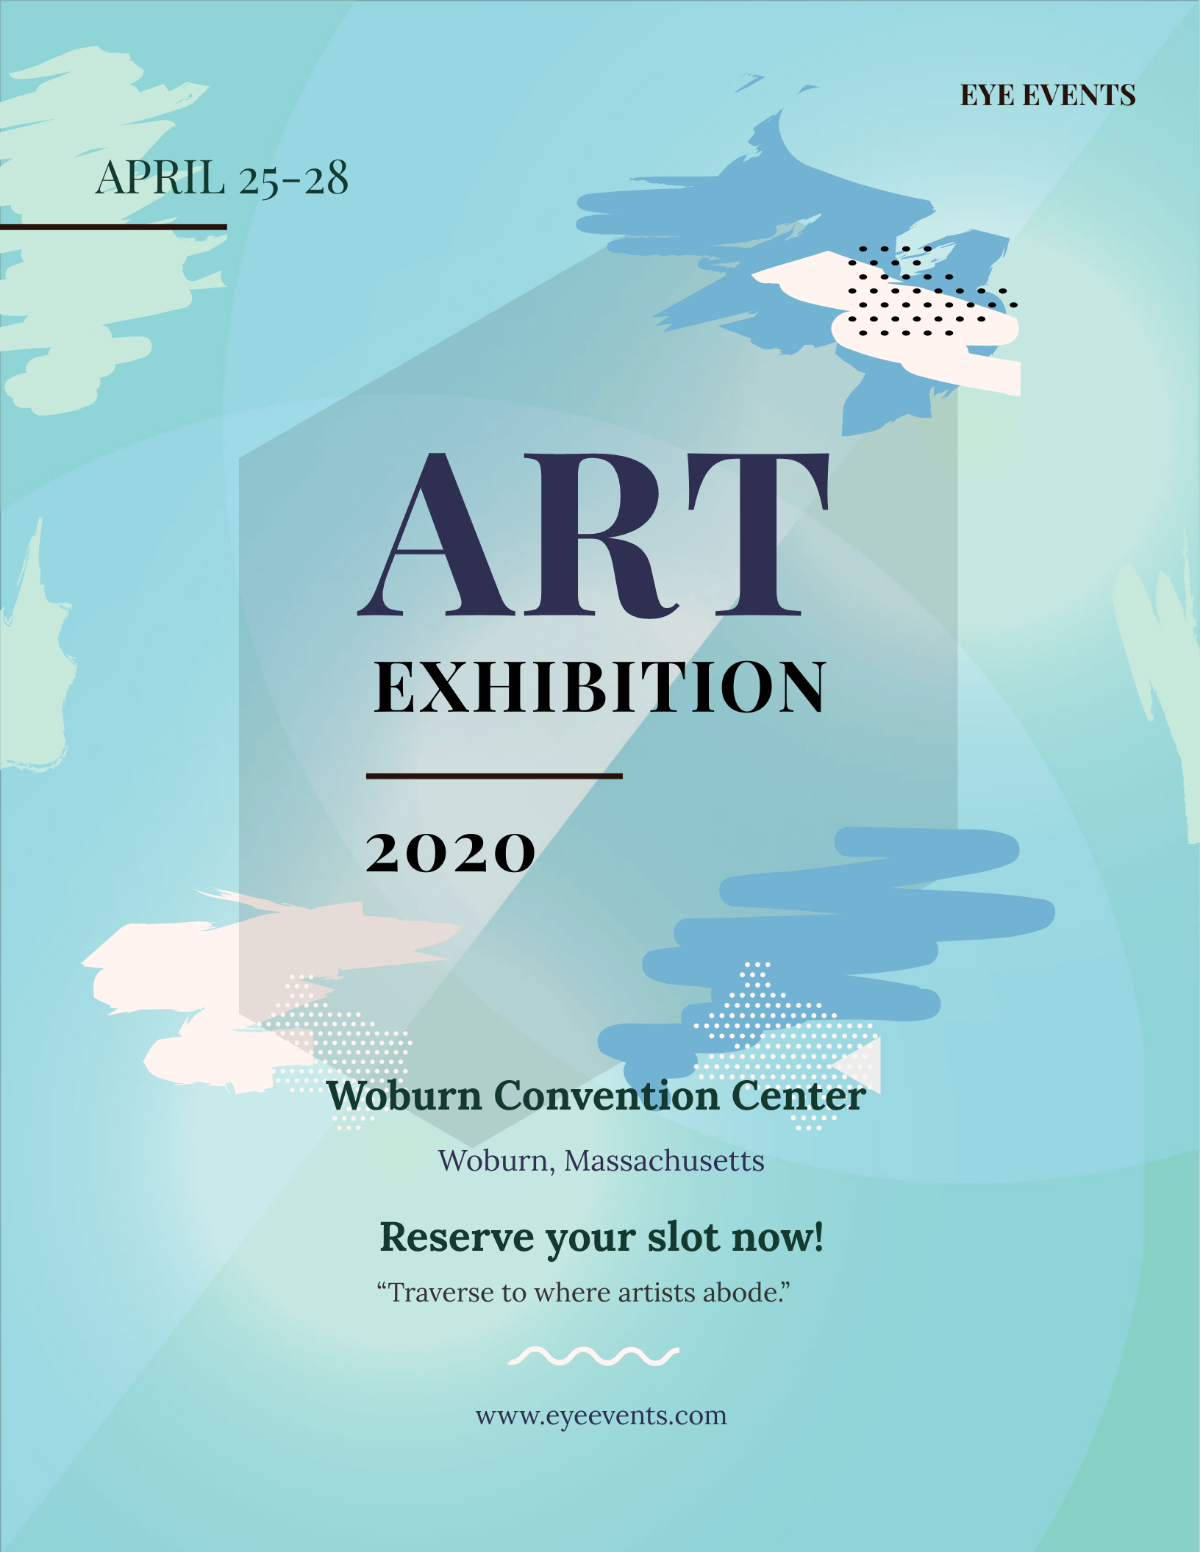 Art Exhibition Flyer Template